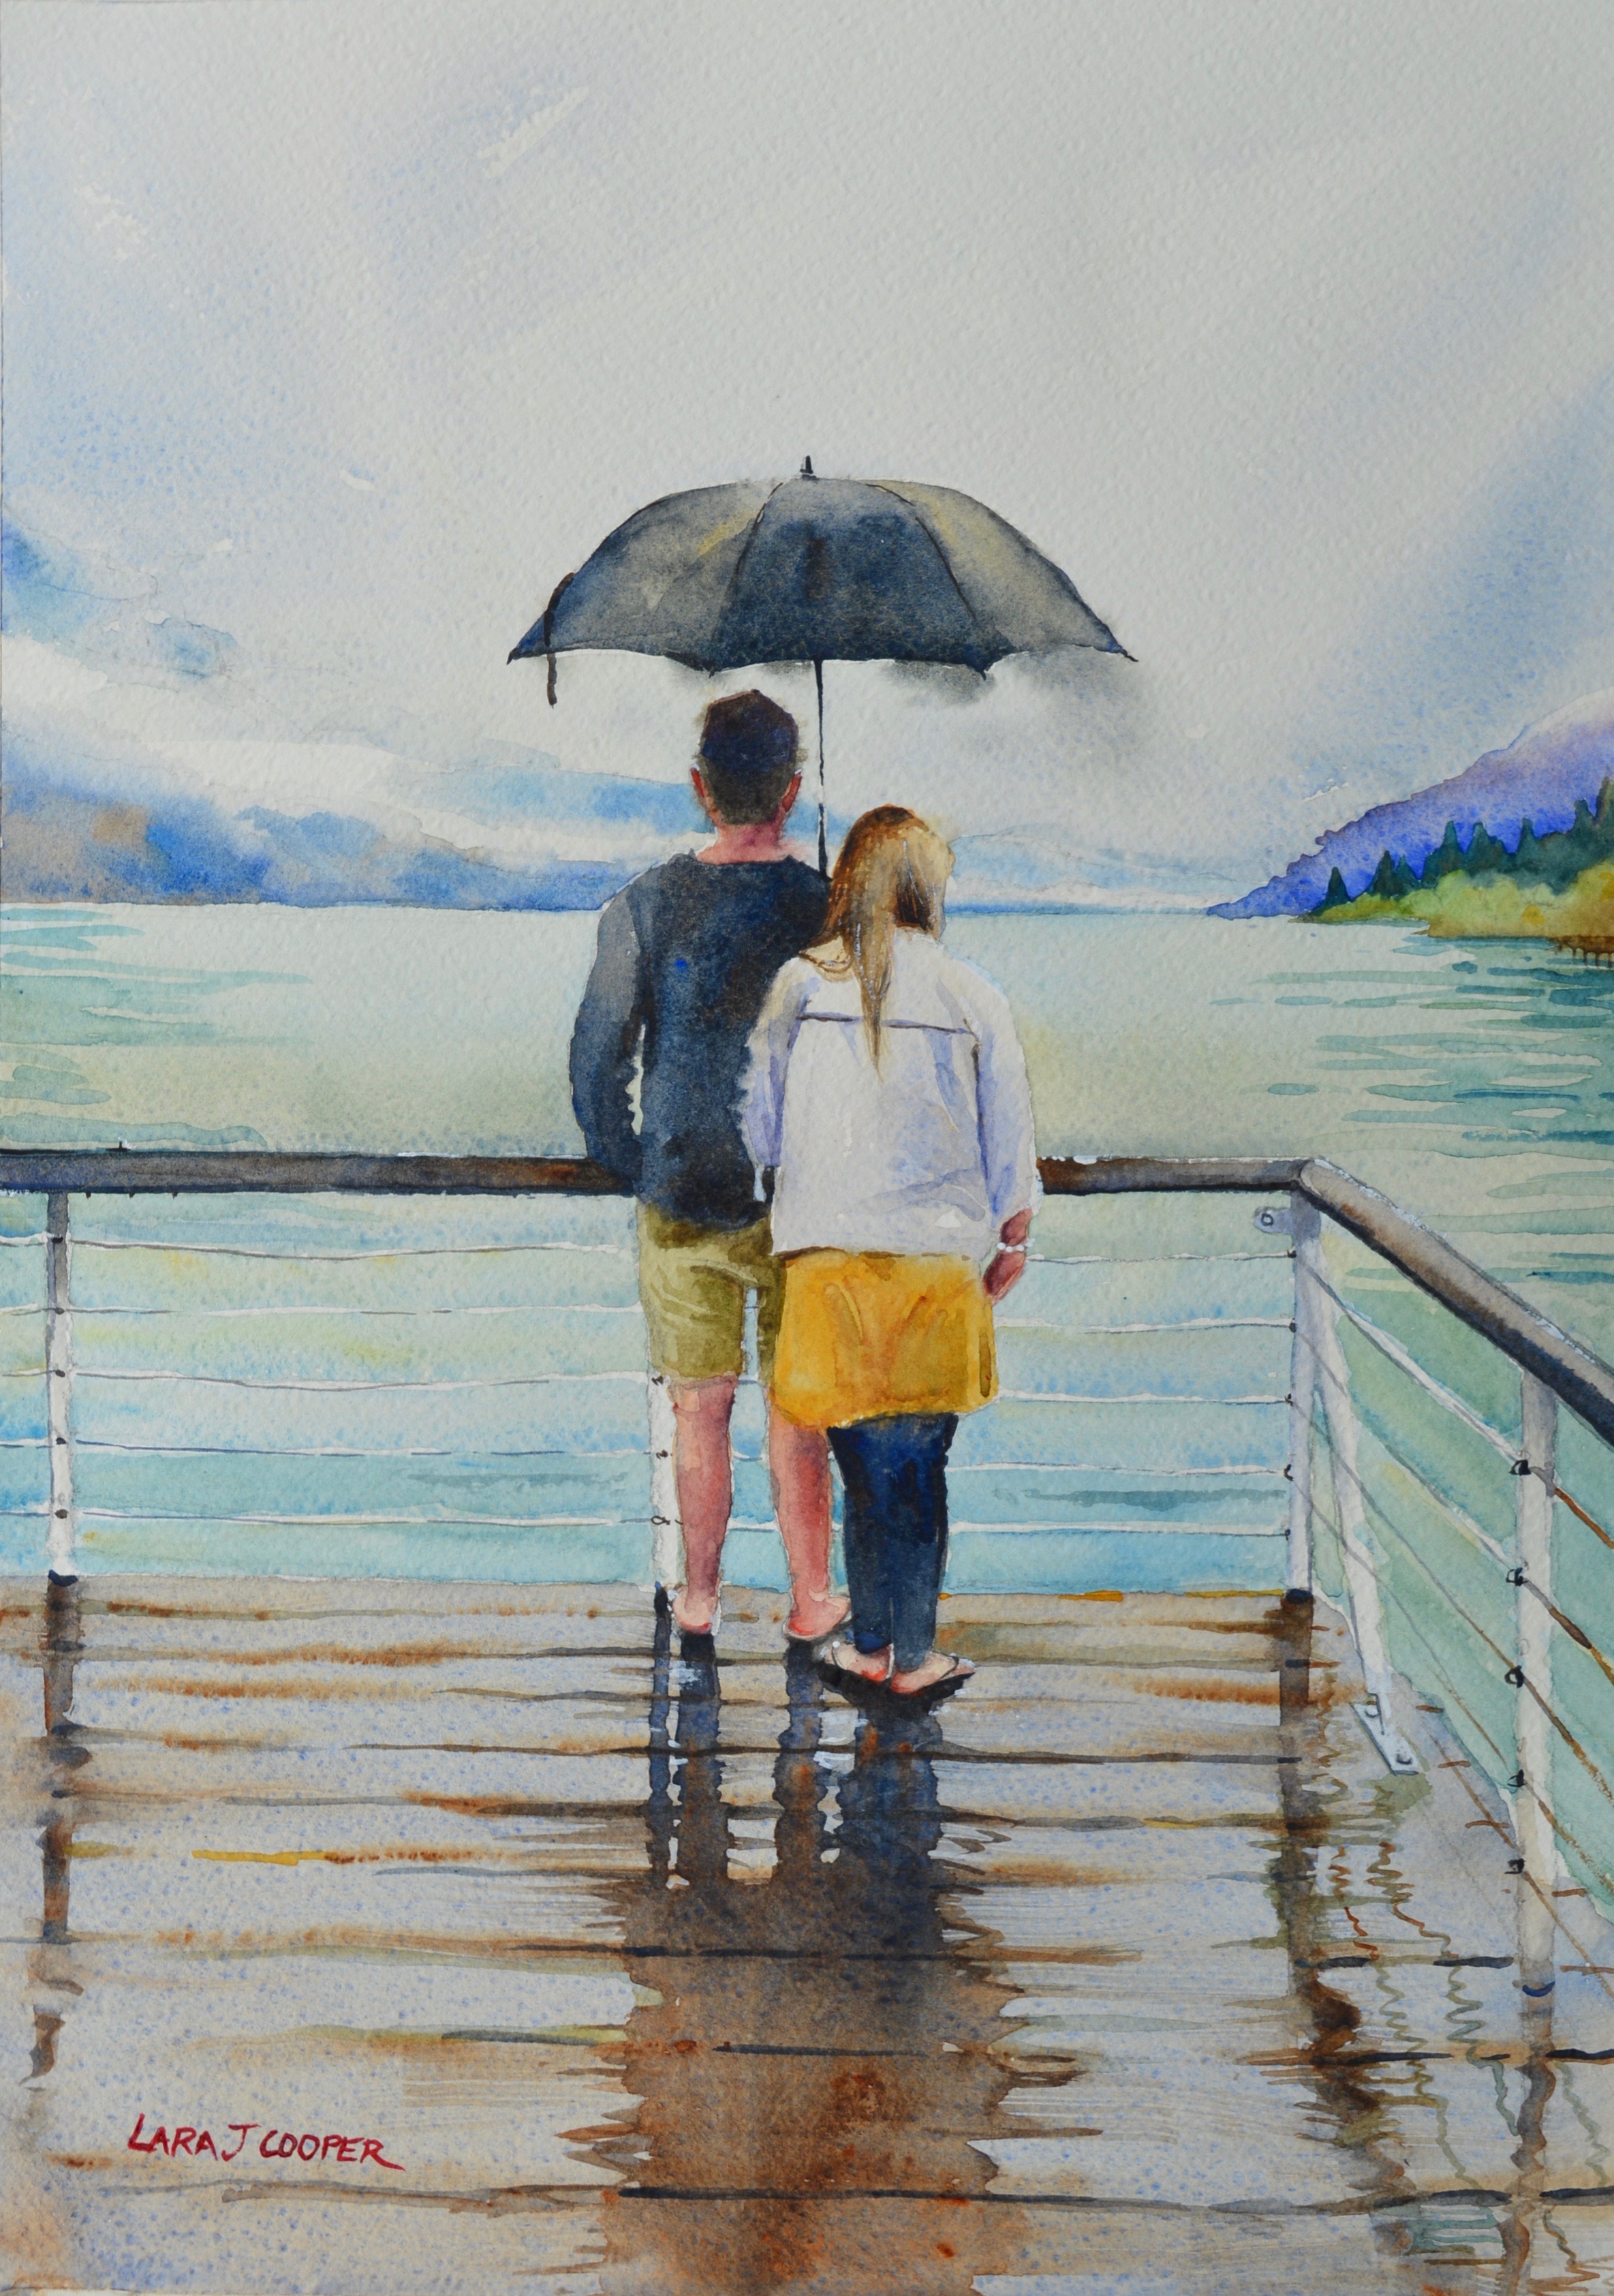 Watercolour, New Zealand, lake, mountains, rainy, raining, umbrella, yellow, deck, dock, boardwalk, couple, honeymoon, peaceful, peace, view, painting, drizzle, cloud, mist